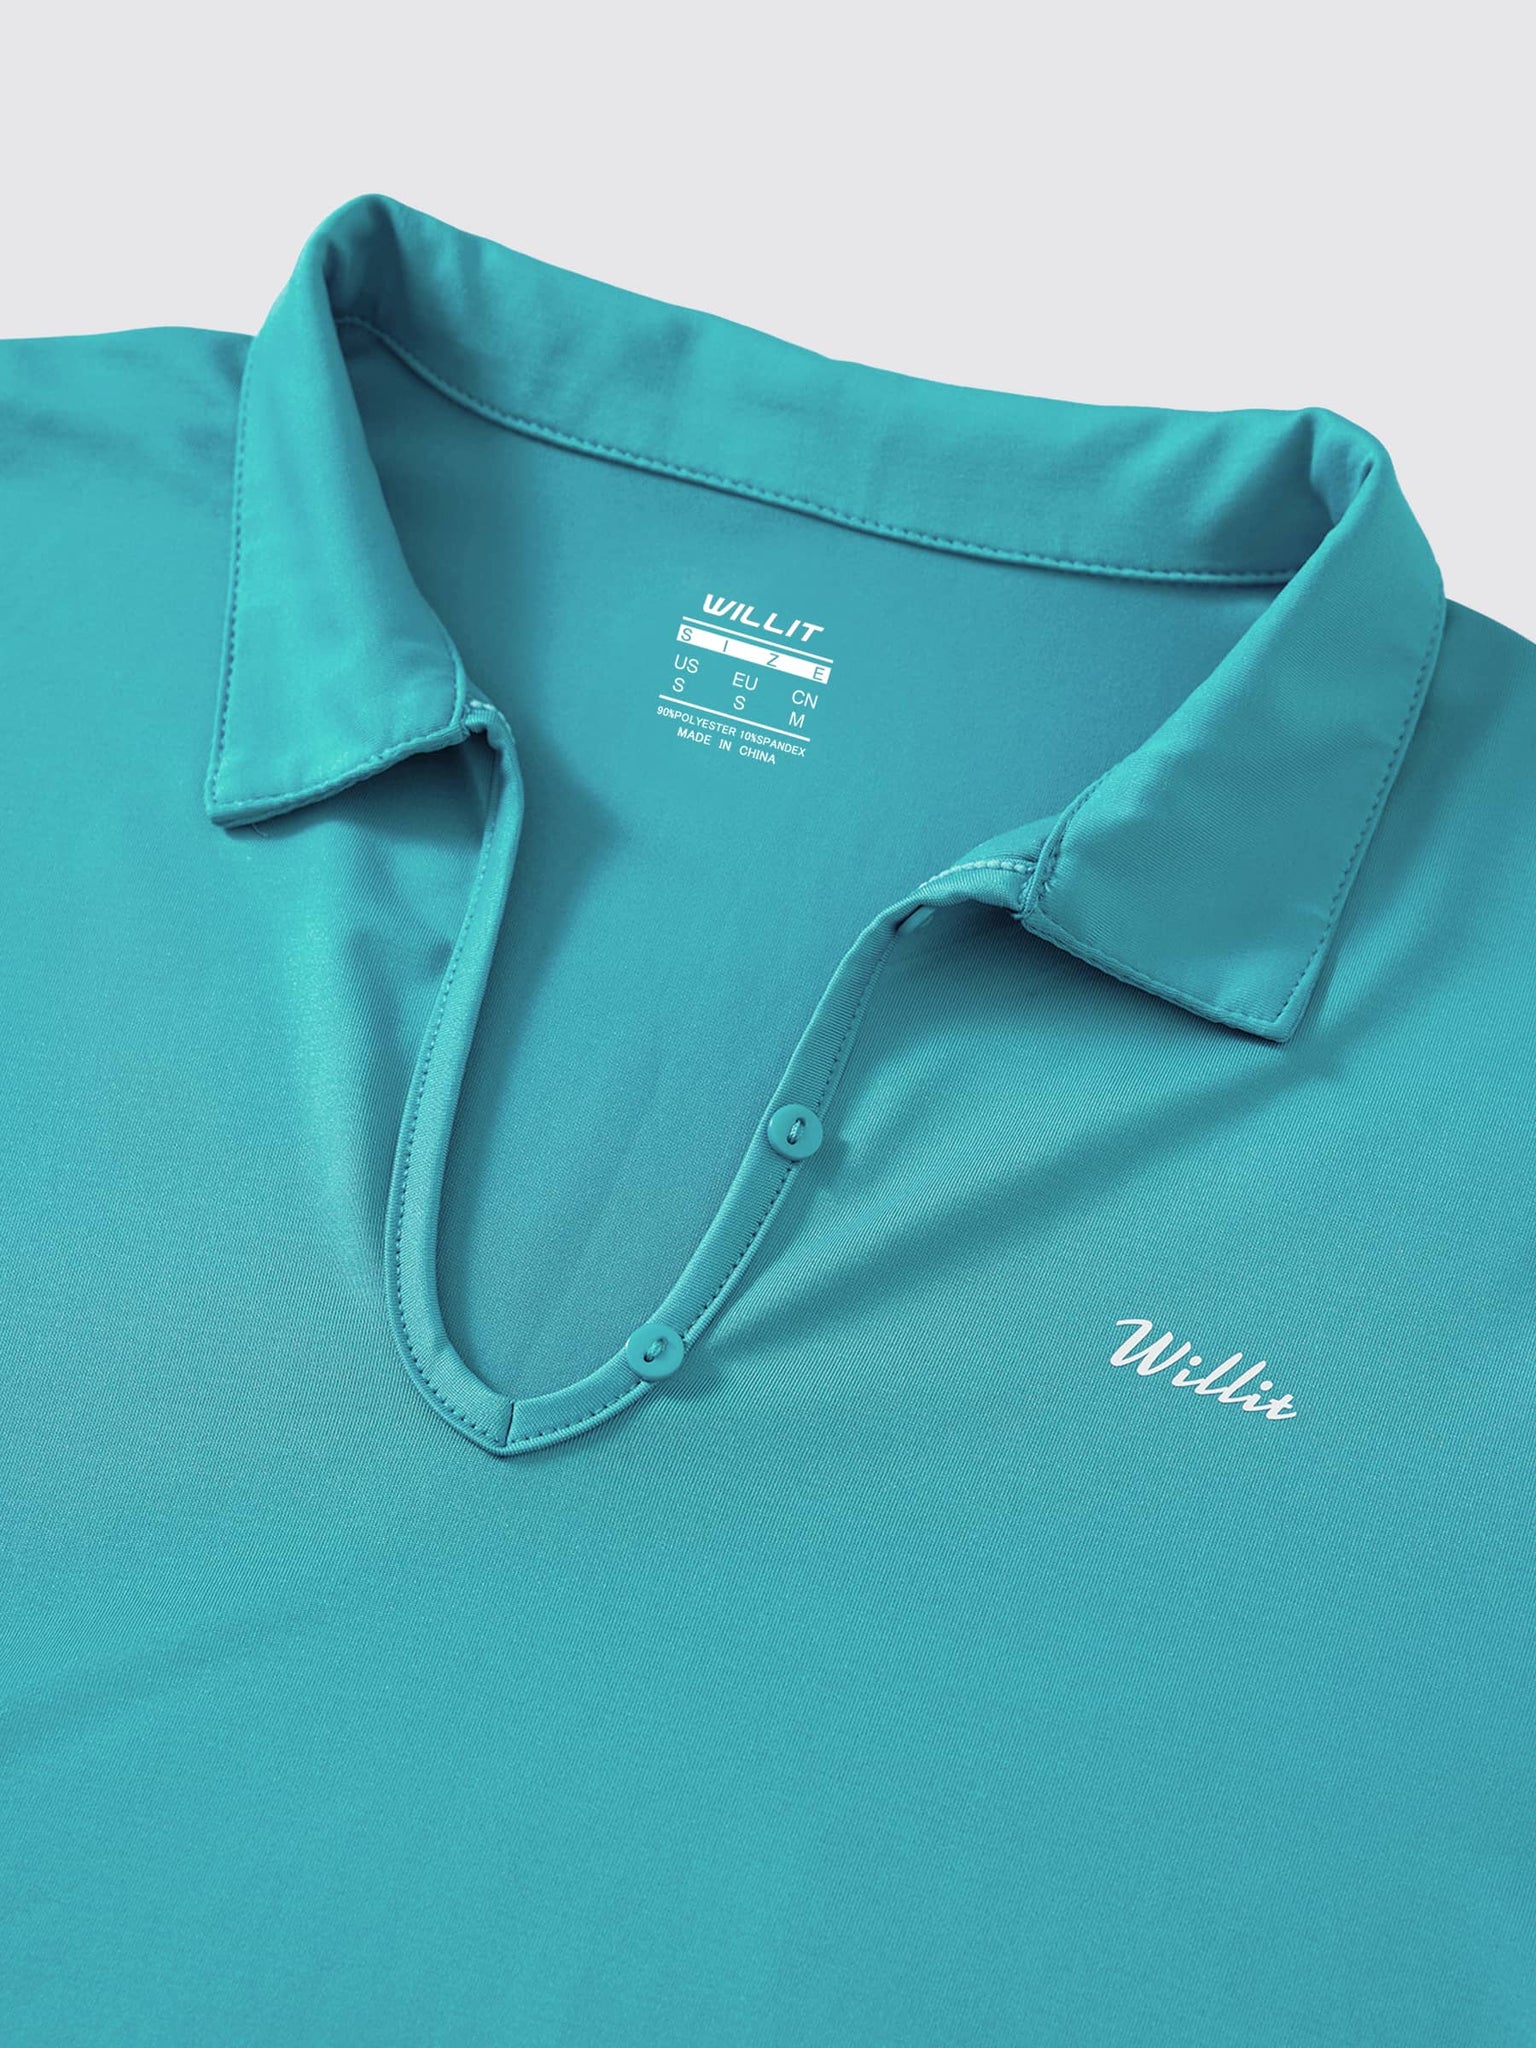 Willit Women's Golf Polo Short Sleeve Shirts_Aqua4